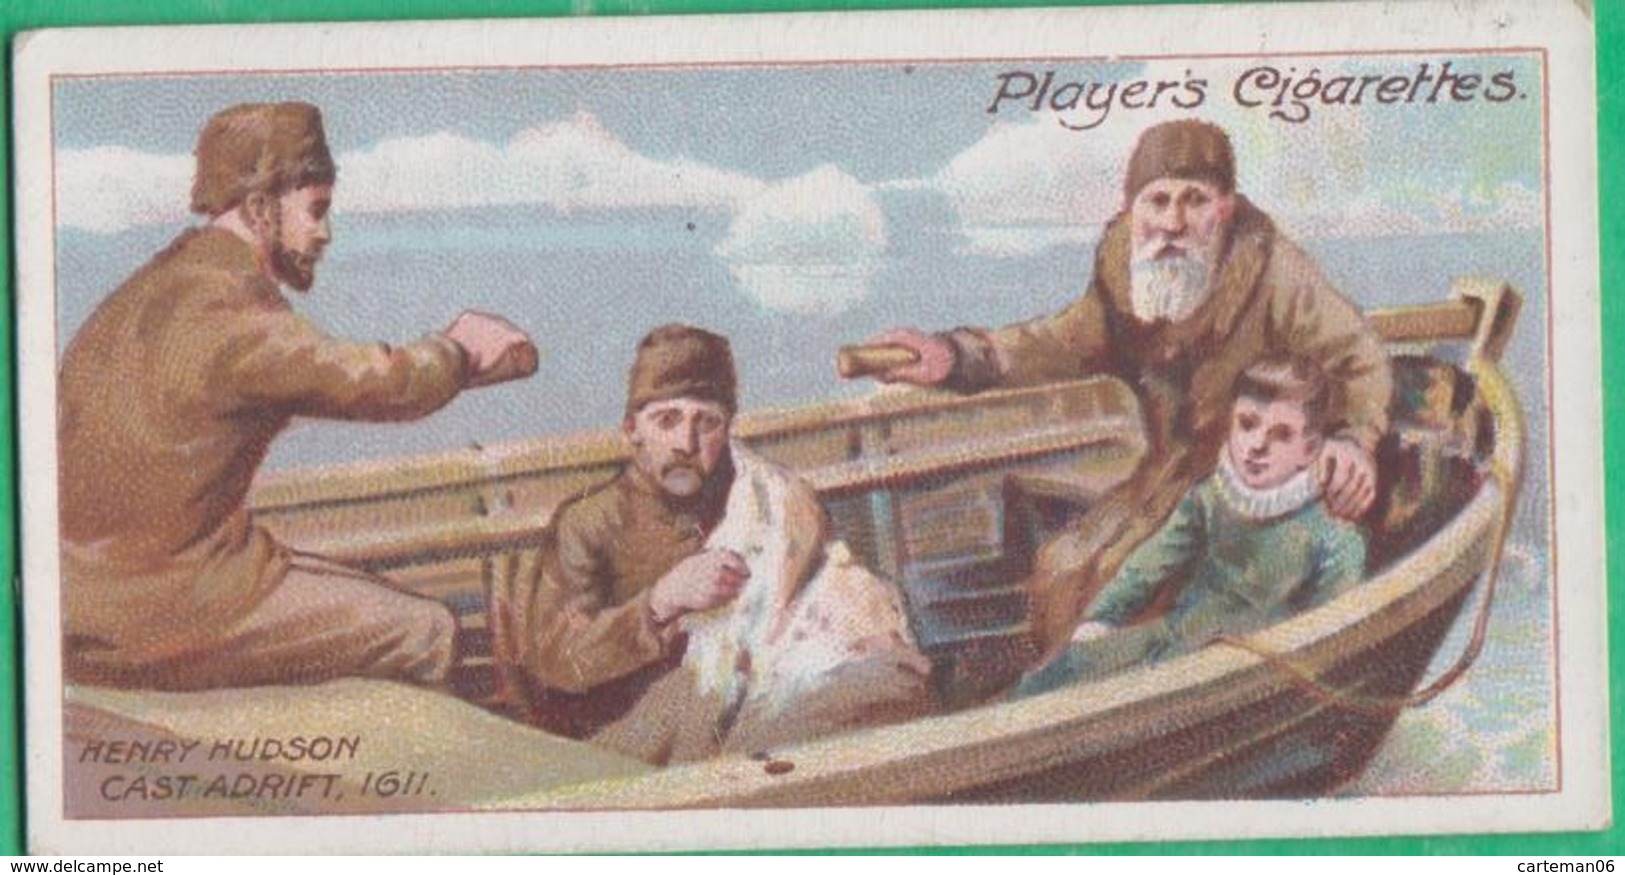 John Player, Player's Cigarettes, Polar Exploration - Henry Hudson Cast Adrift, 1611 - Player's